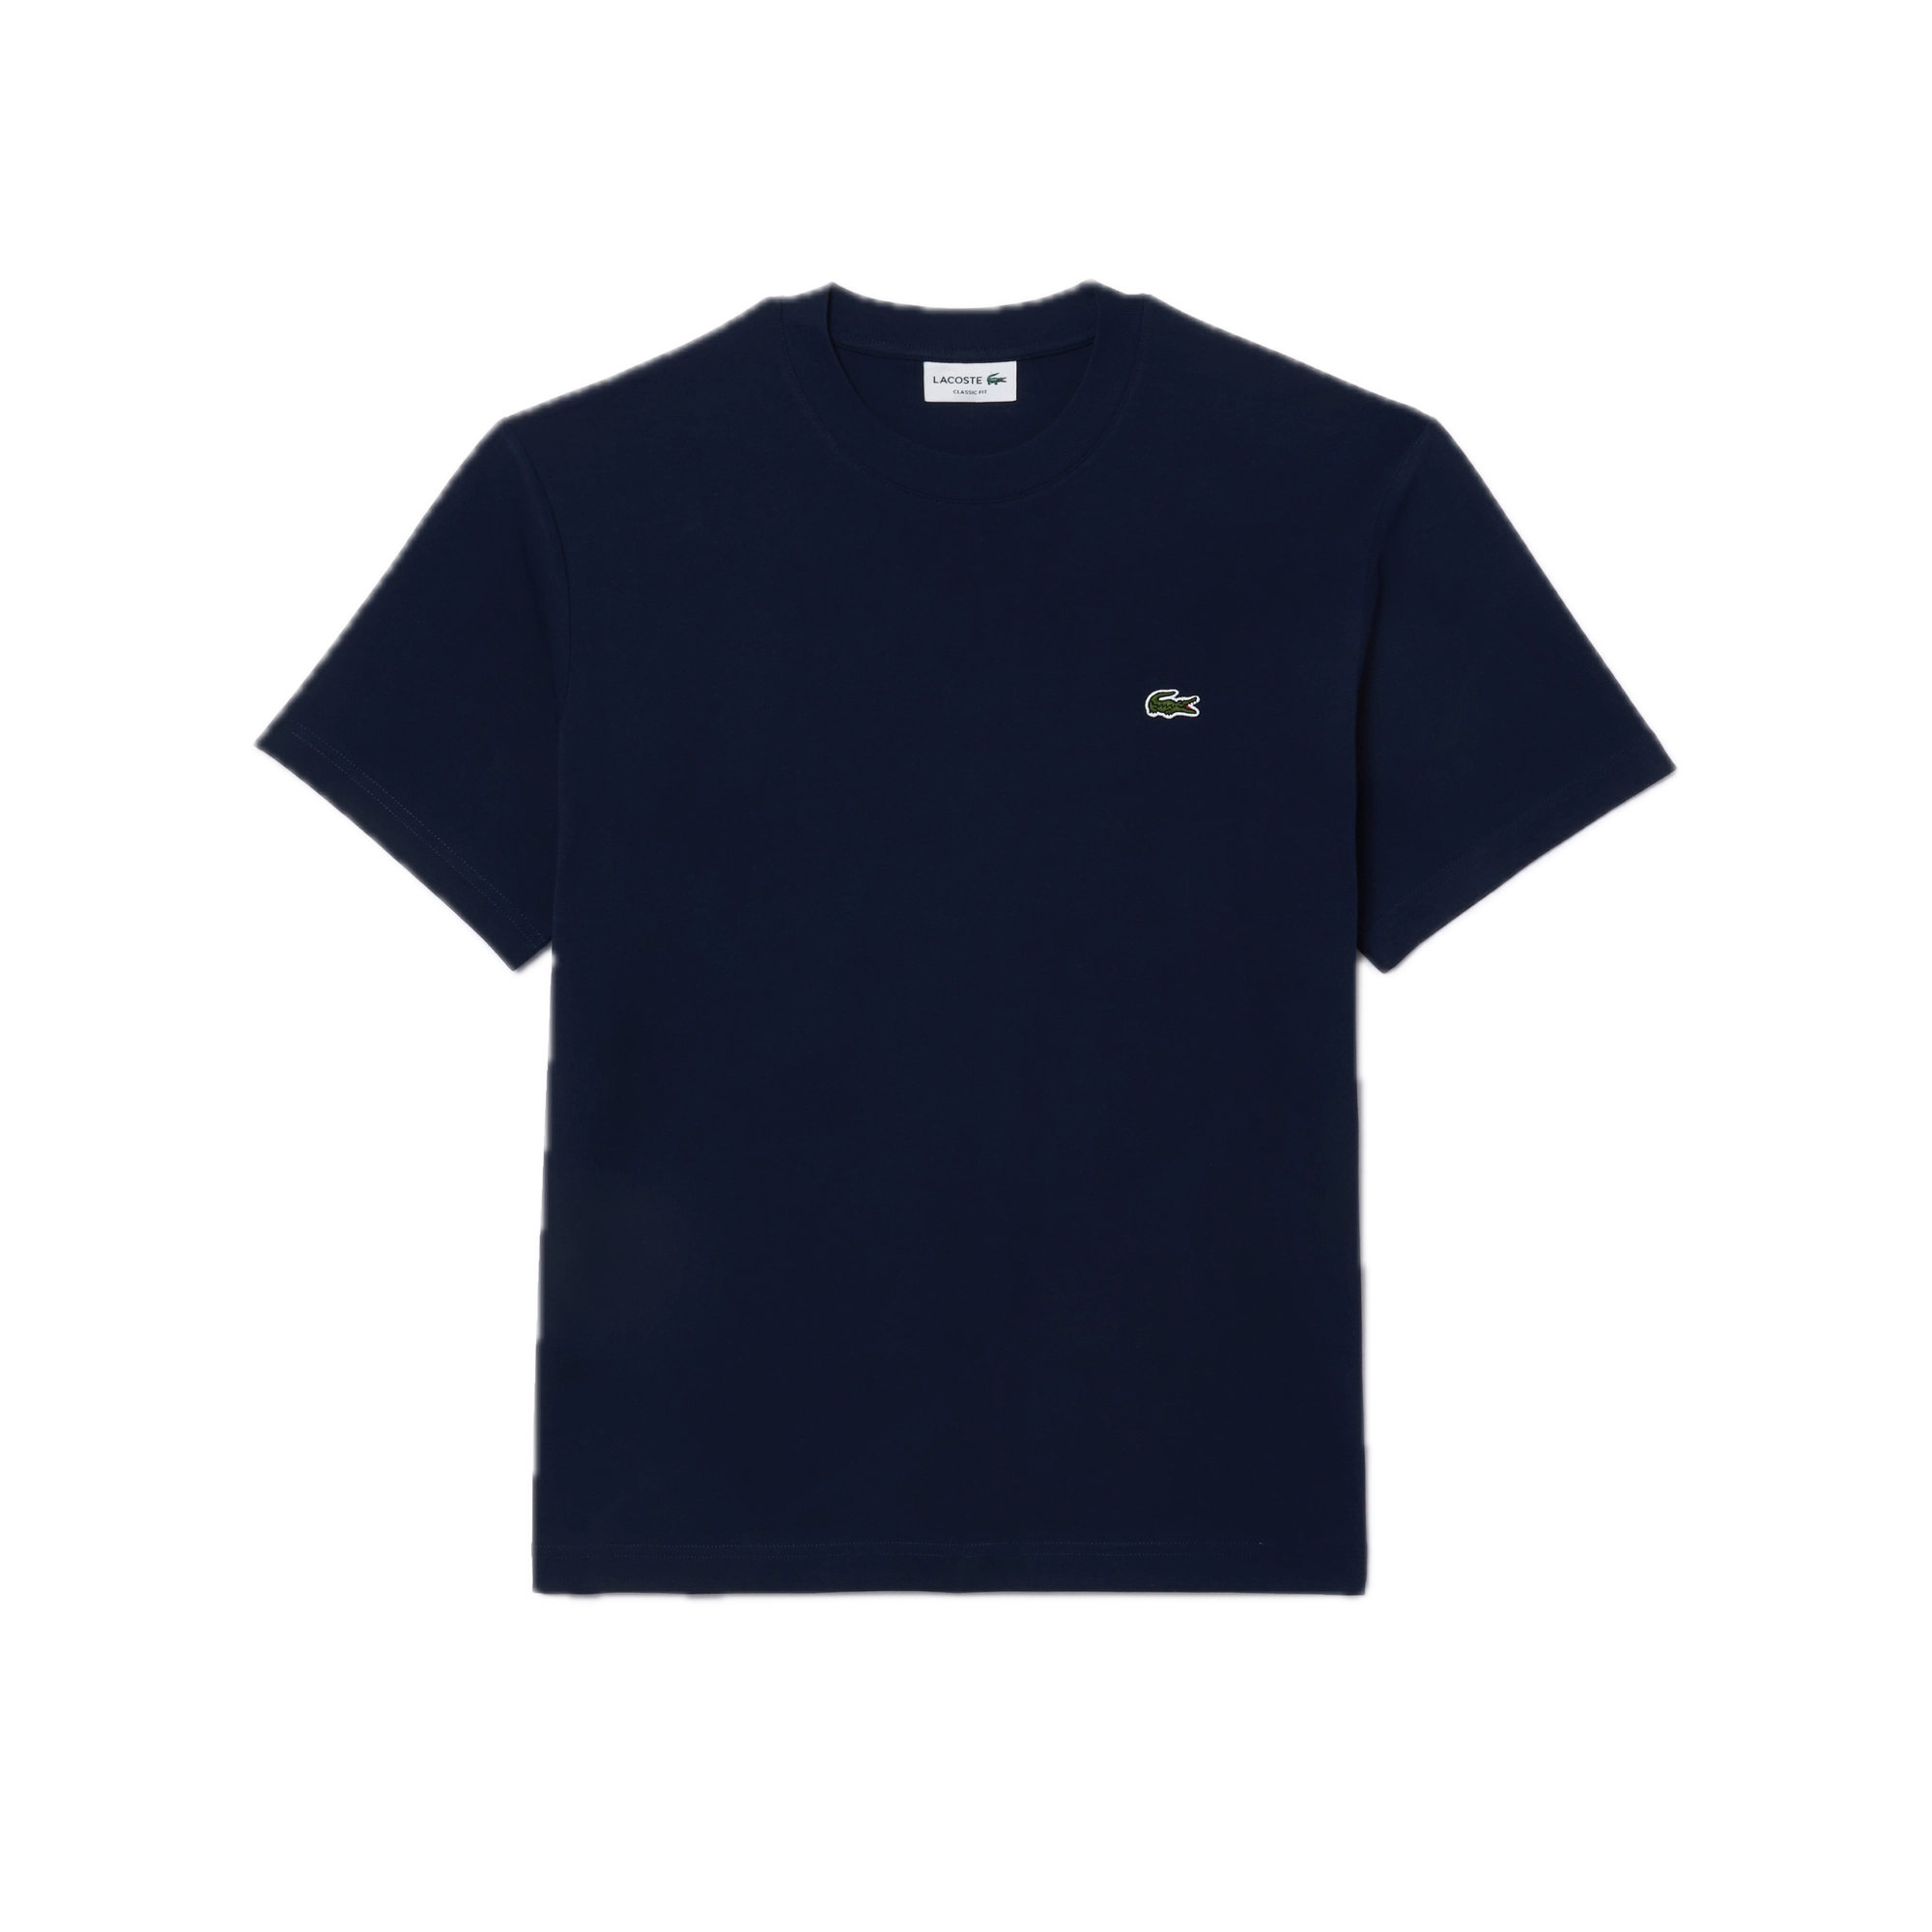 Lacoste Navy Blue Cotton Jersey Classic Fit T-shirt 